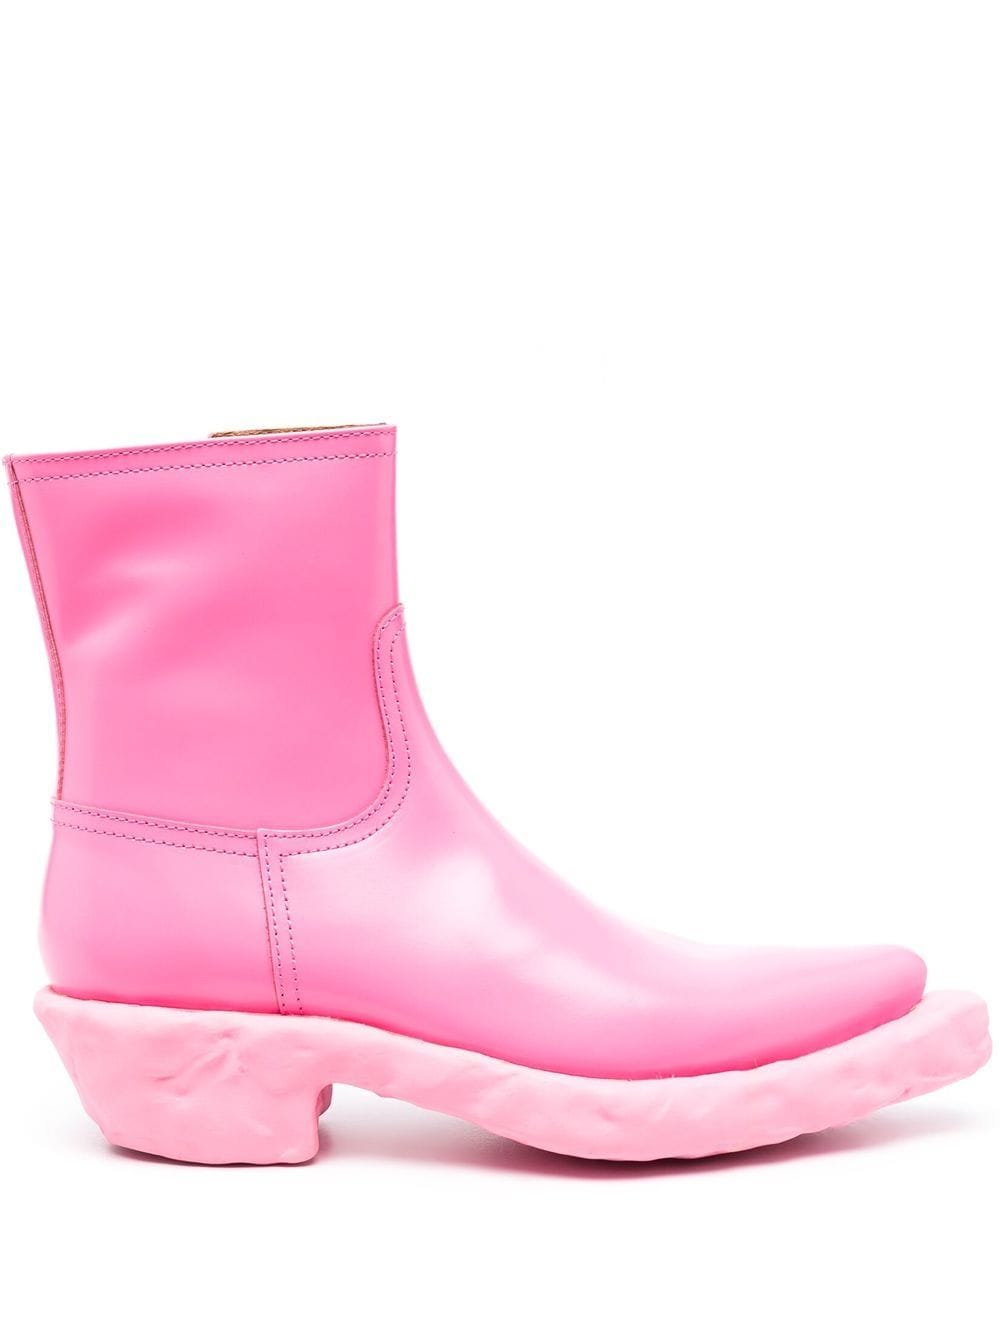 CamperLab Venga Western-style boots - Pink von CamperLab